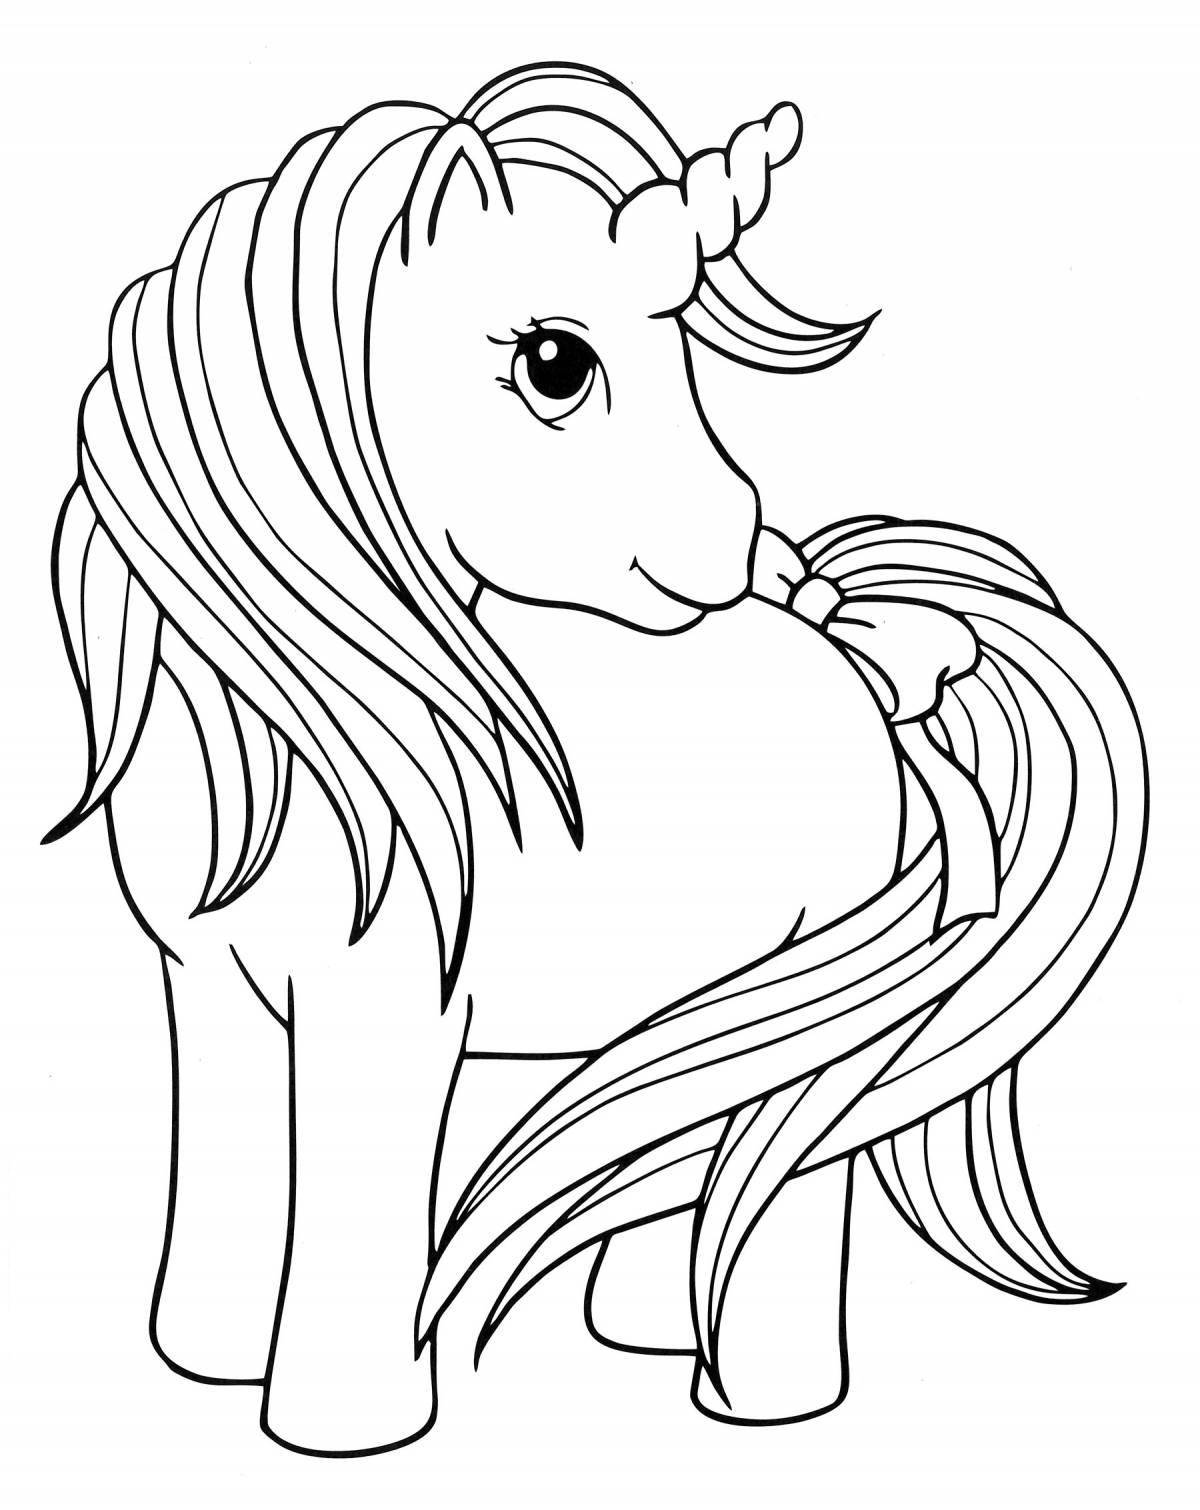 Fairy unicorn dog coloring page